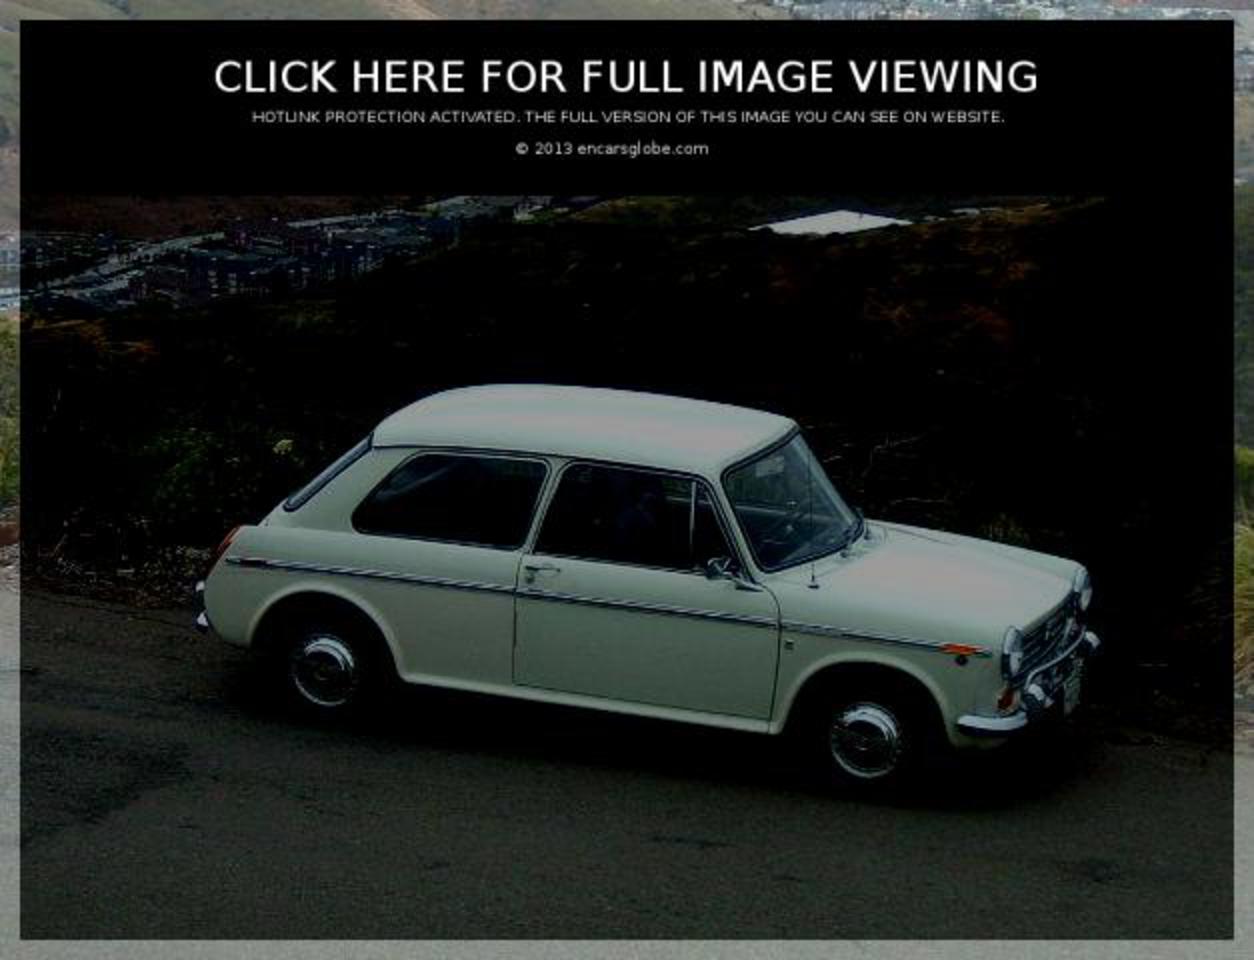 Austin Mini 850 panel van Photo Gallery: Photo #07 out of 8, Image ...